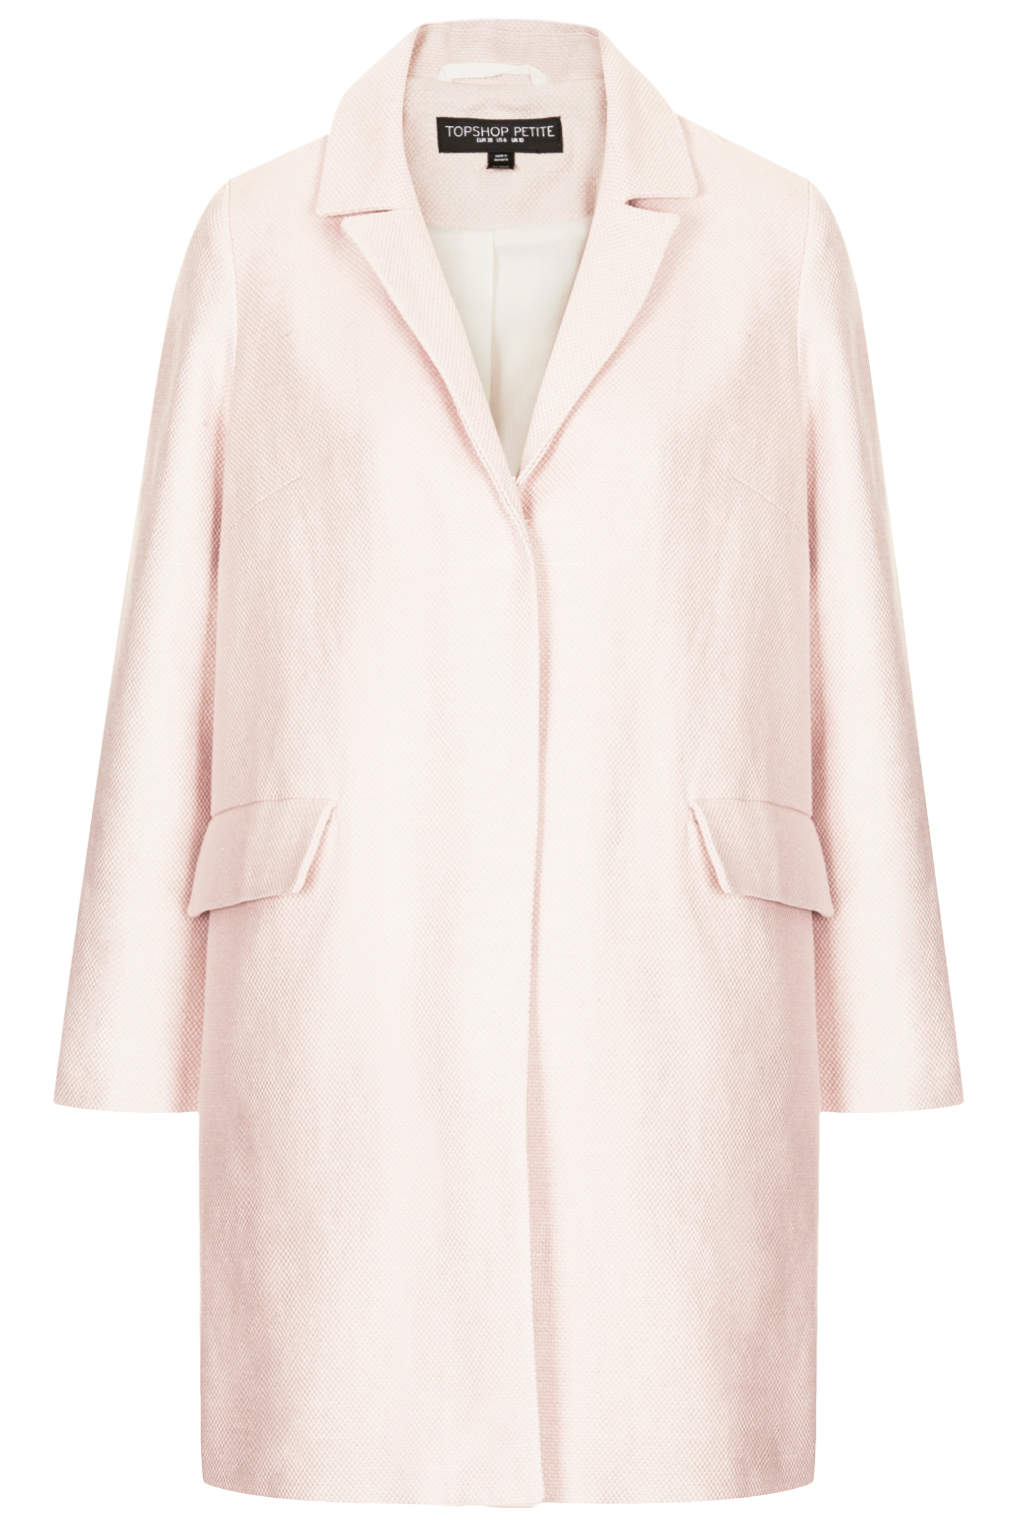 Topshop Petite Textured Swing Coat in Pink (PALE PINK) | Lyst